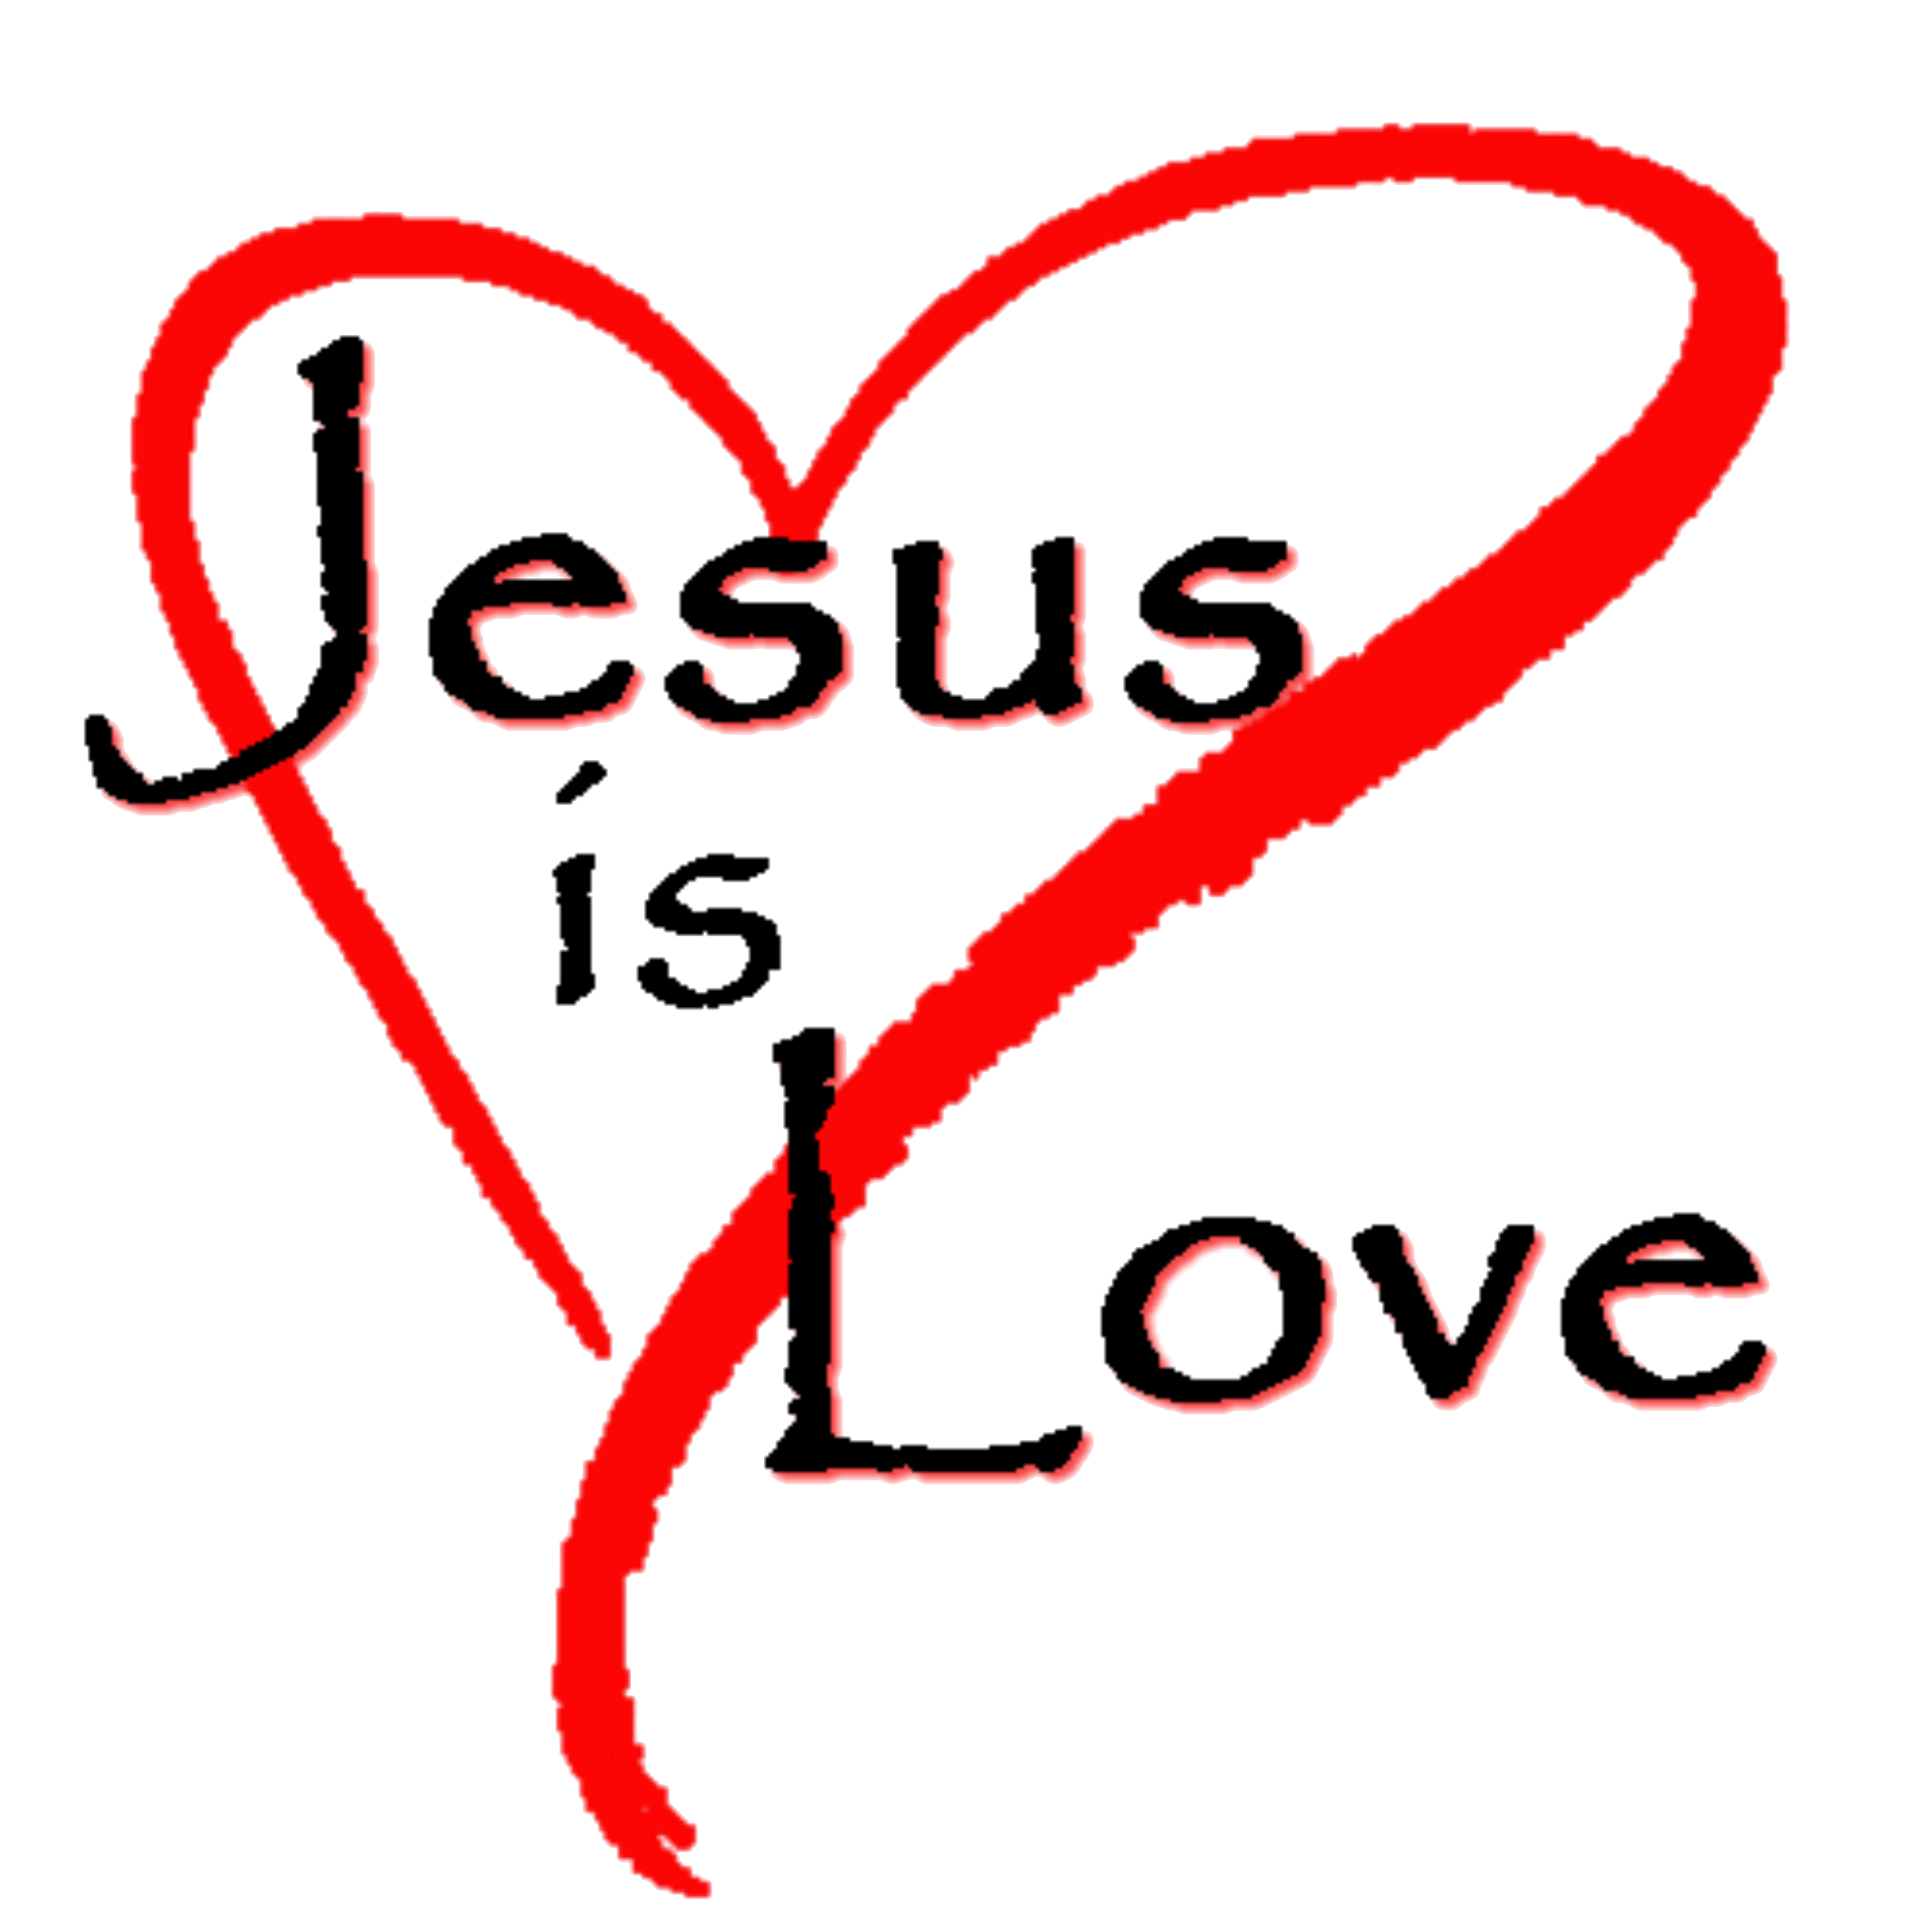 Goddess i love. Иисус надпись. Иисус логотип. Надпись Иисус любит тебя. Сердечко с надписью Иисус любит тебя.